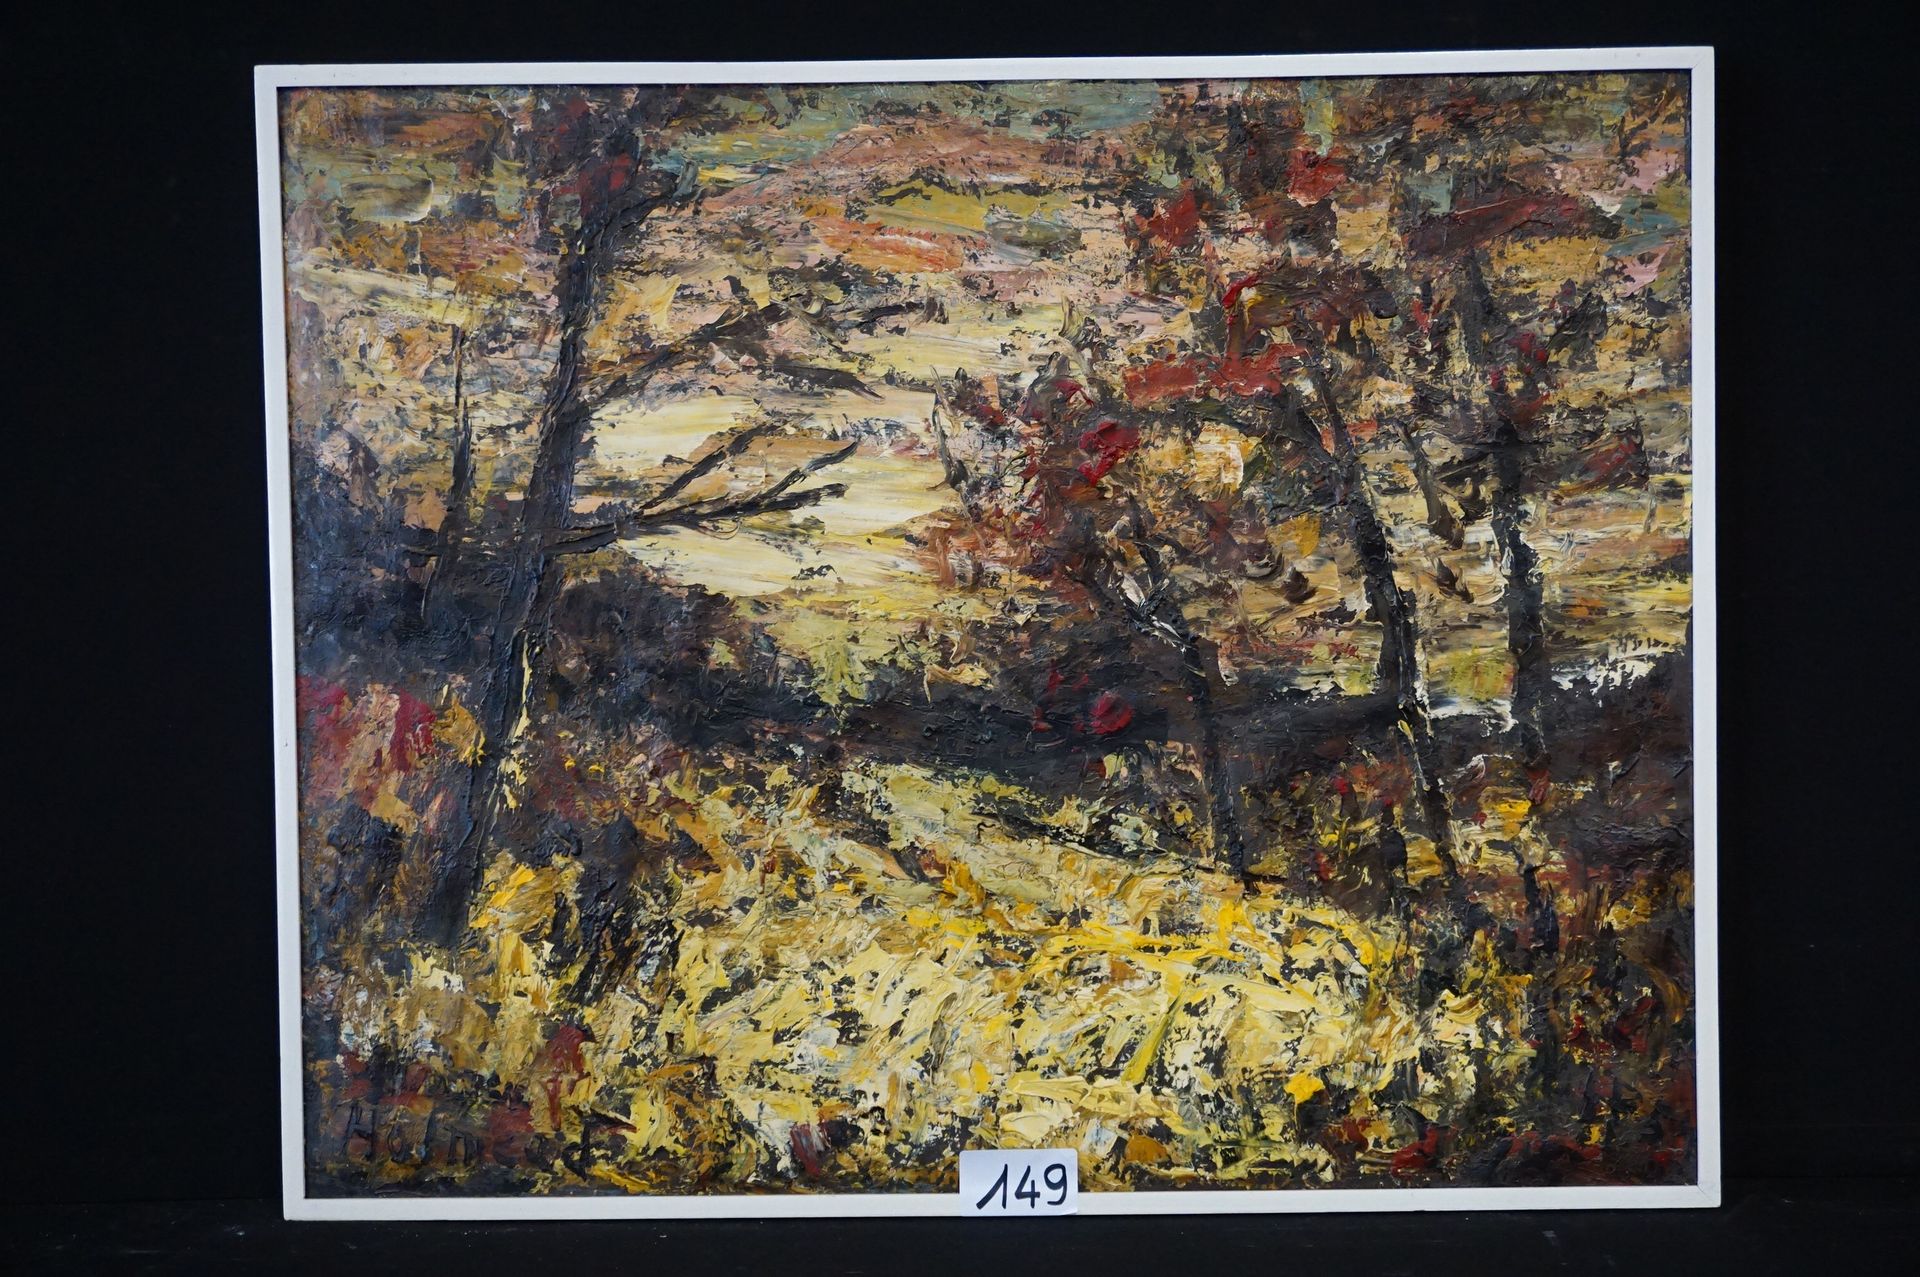 CLIFFORD HOLMEAD PHILIPS (1889 - 1975) "秋天" - 布面油画 - 已签名 60 x 75 cm